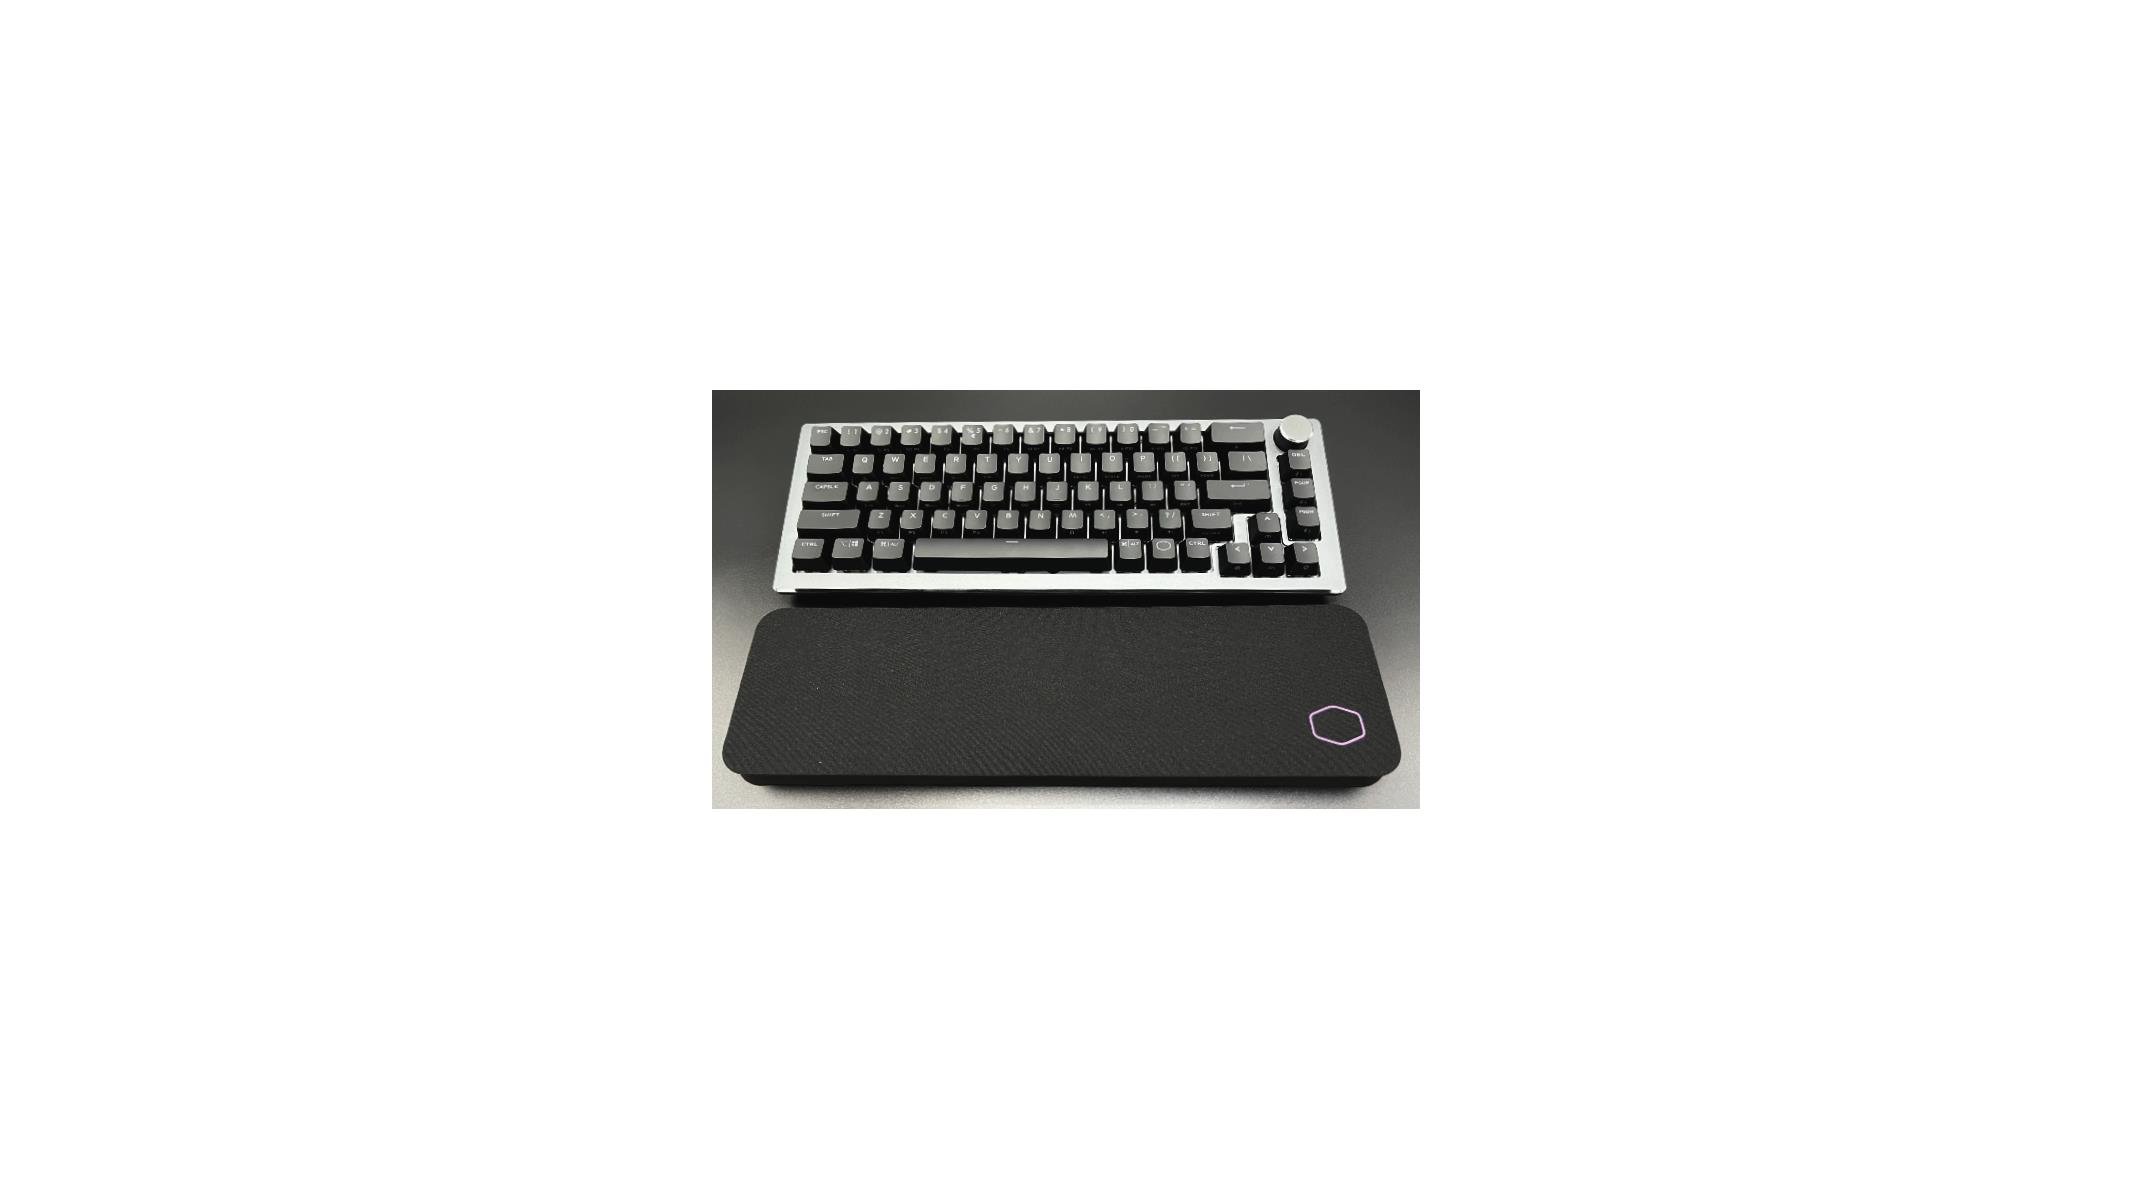 Cooler Master CK721 Review: An Innovative Wireless Keyboard